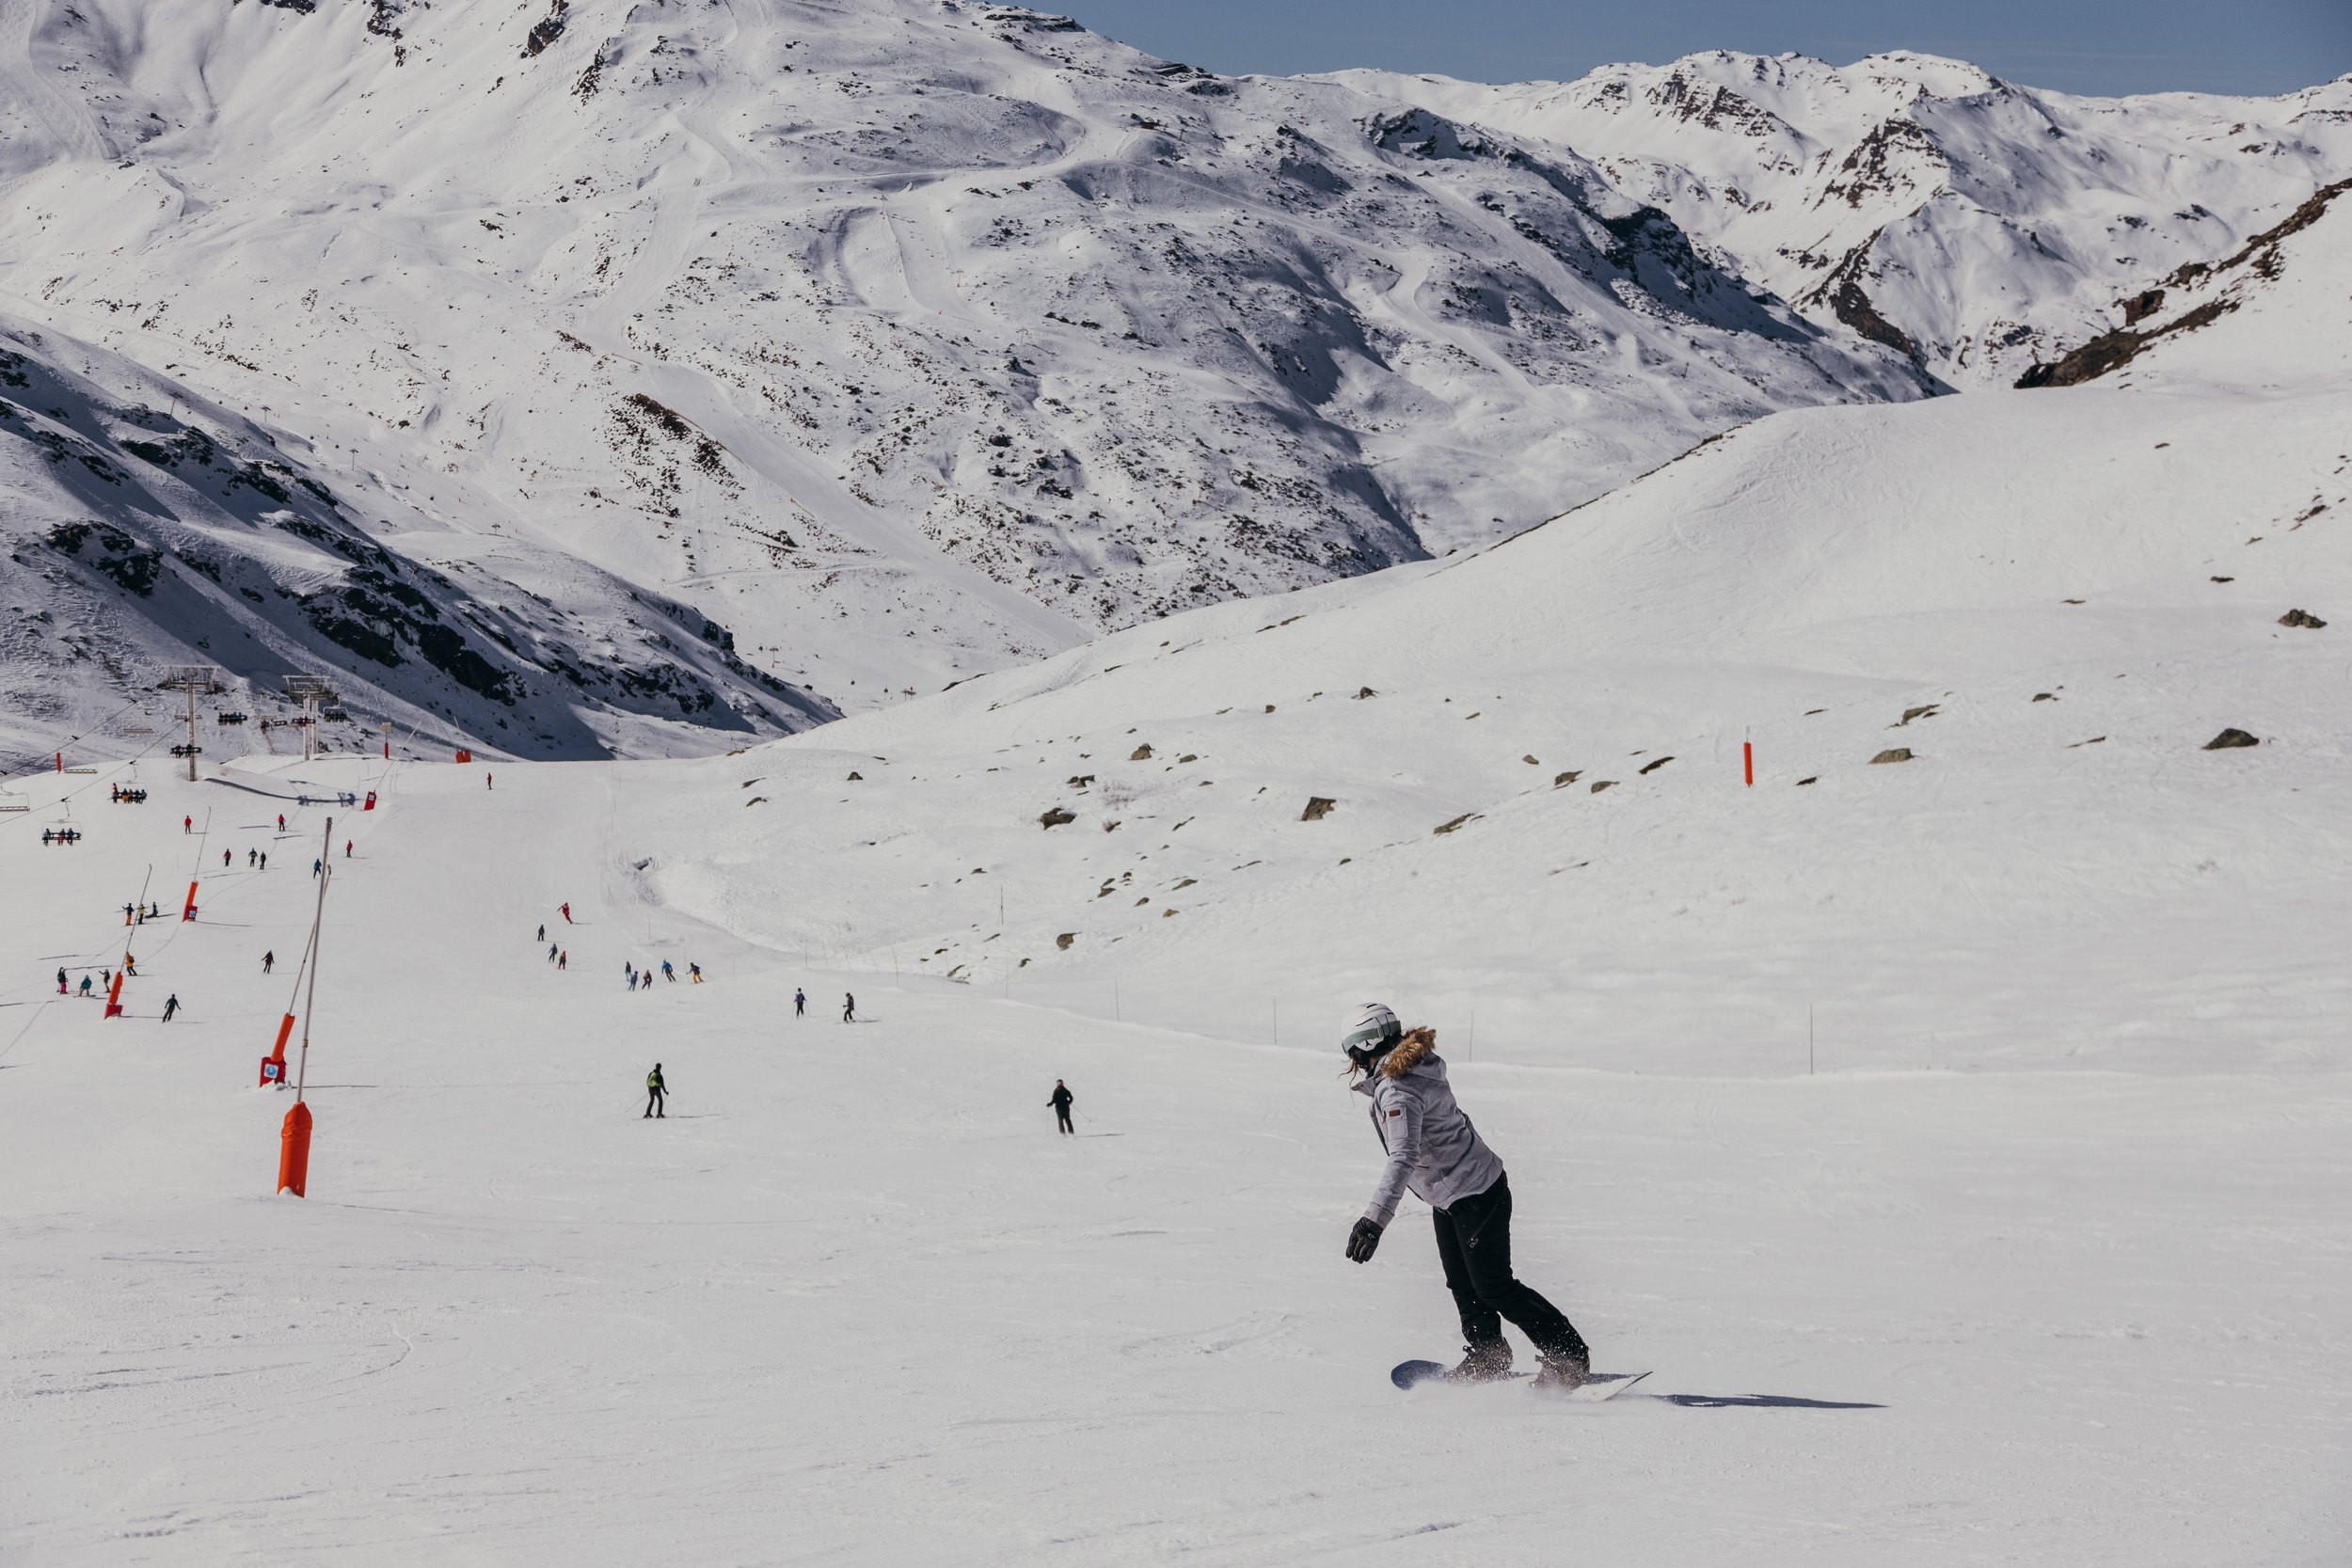 Val Thorens Ski Resort: Find Val Thorens, France Skiing & Ski